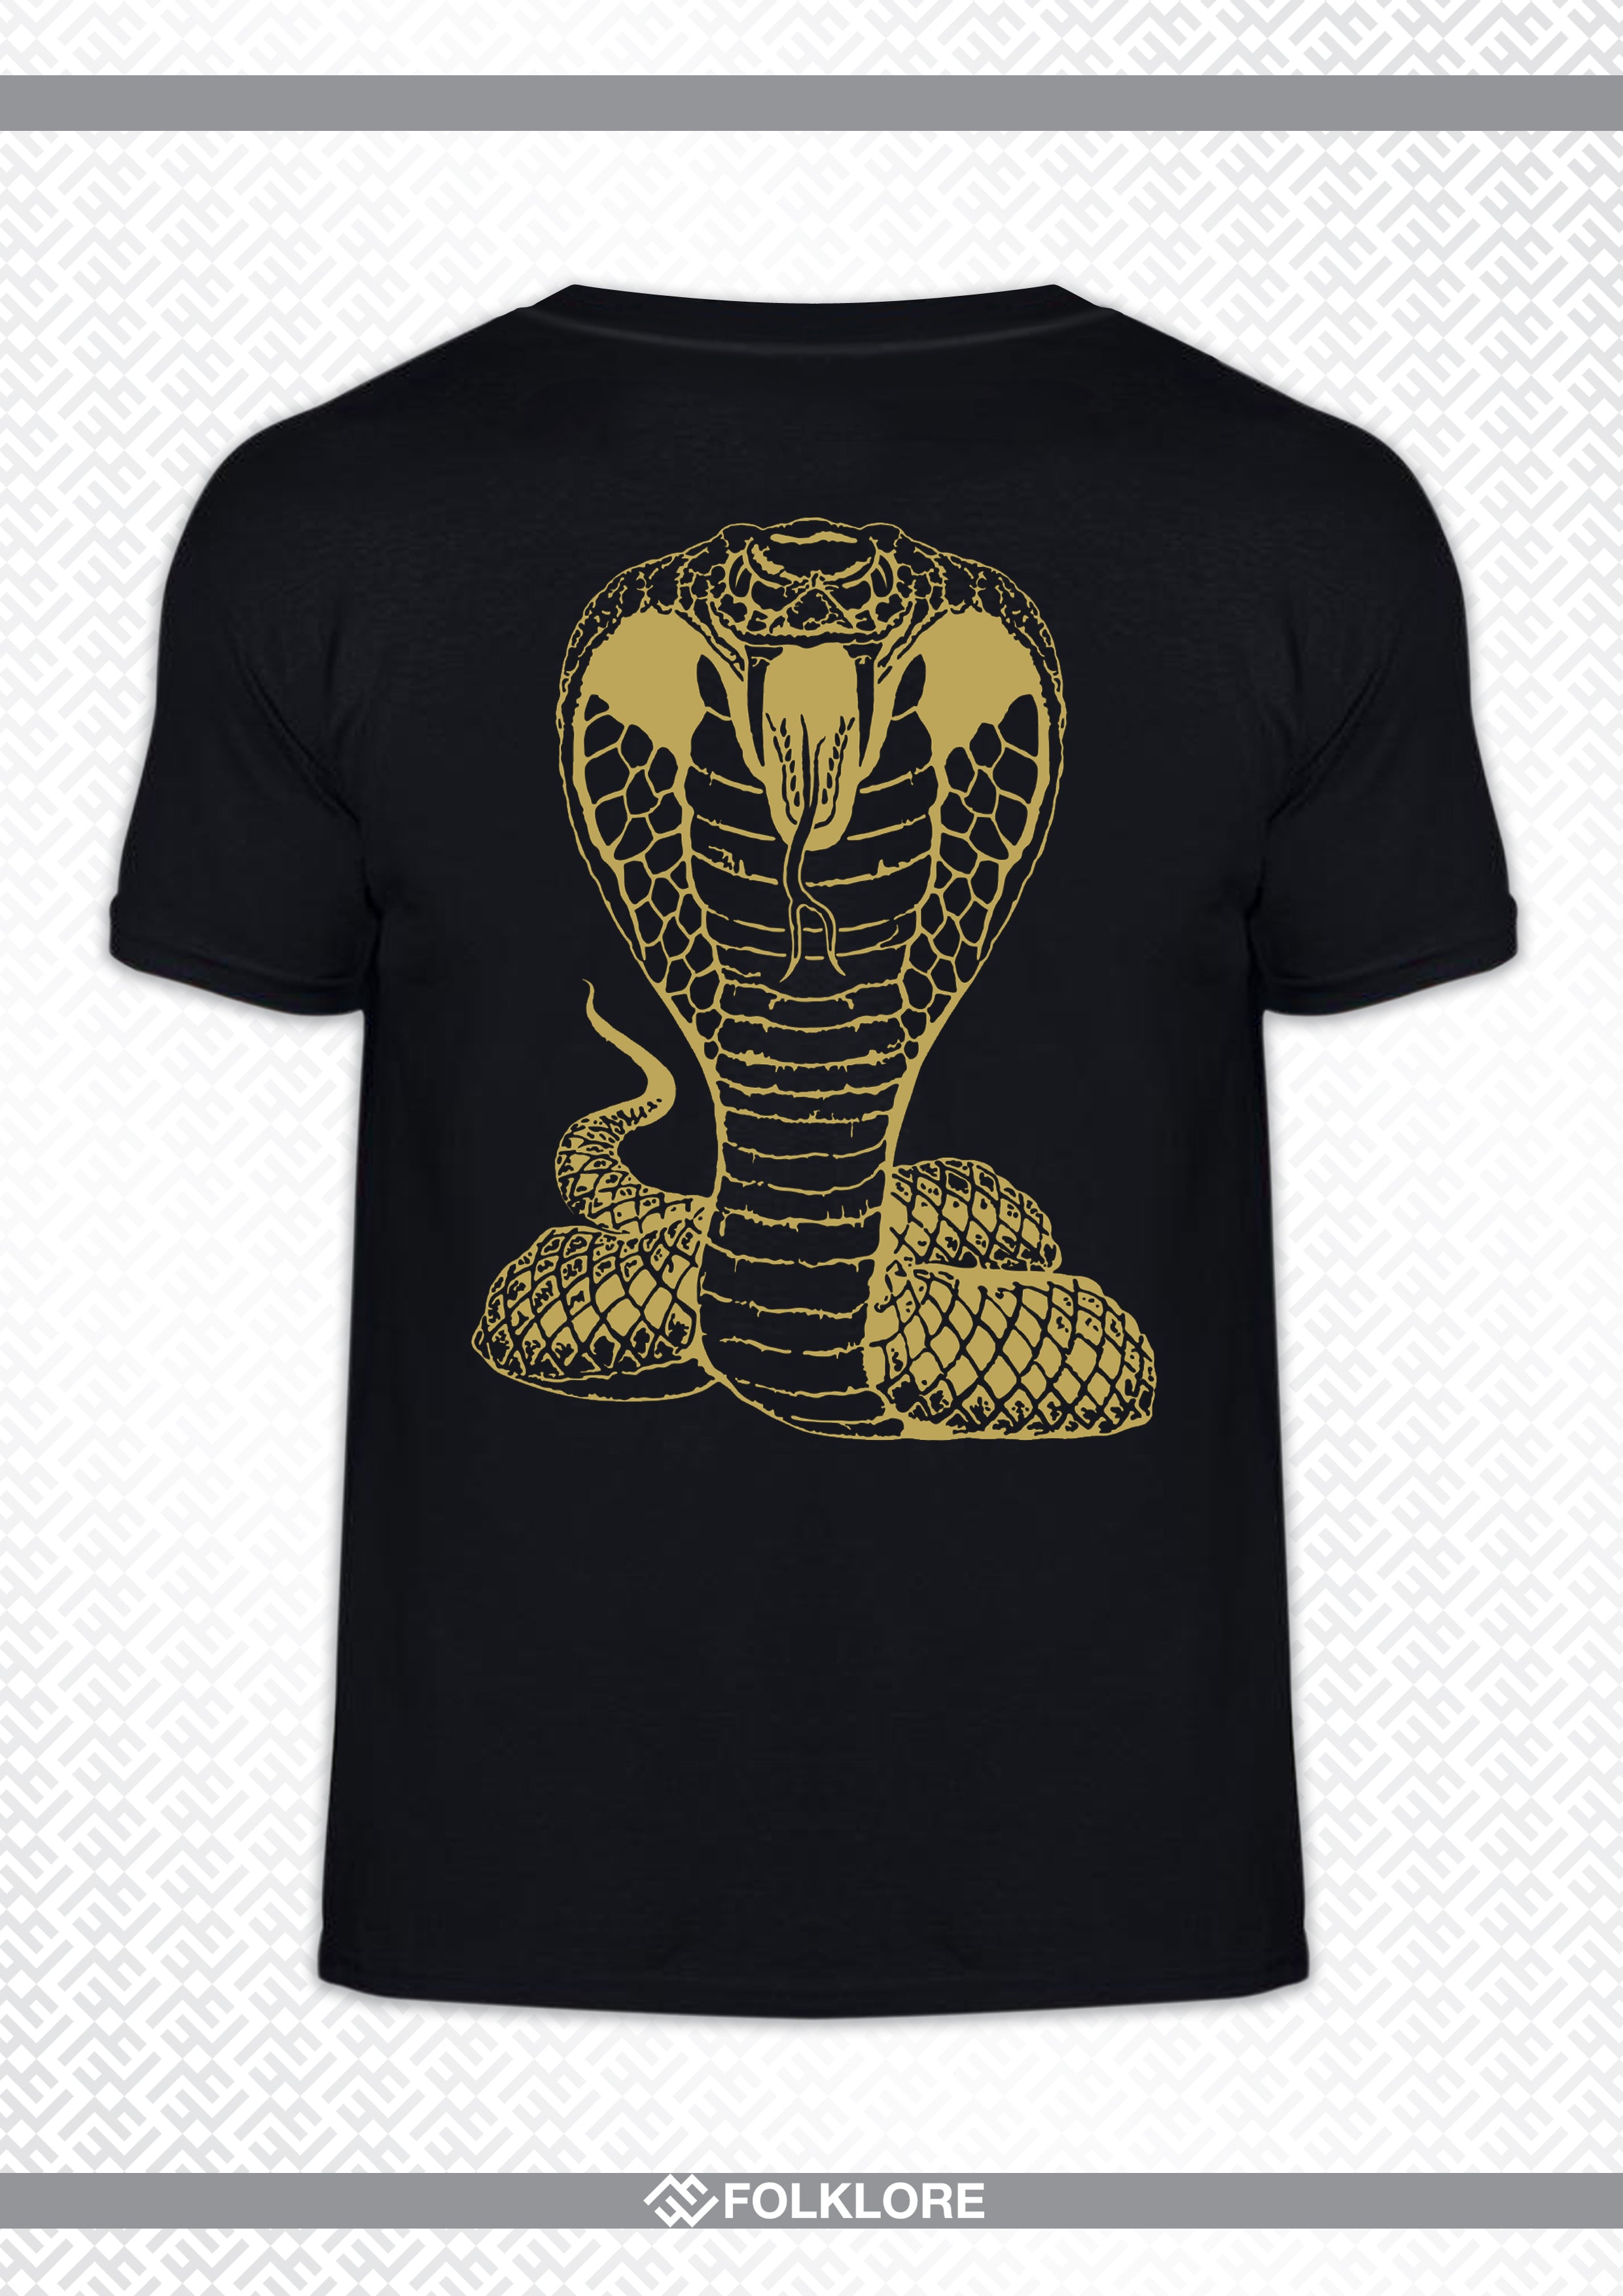 Folklore Black Shirt Cobra